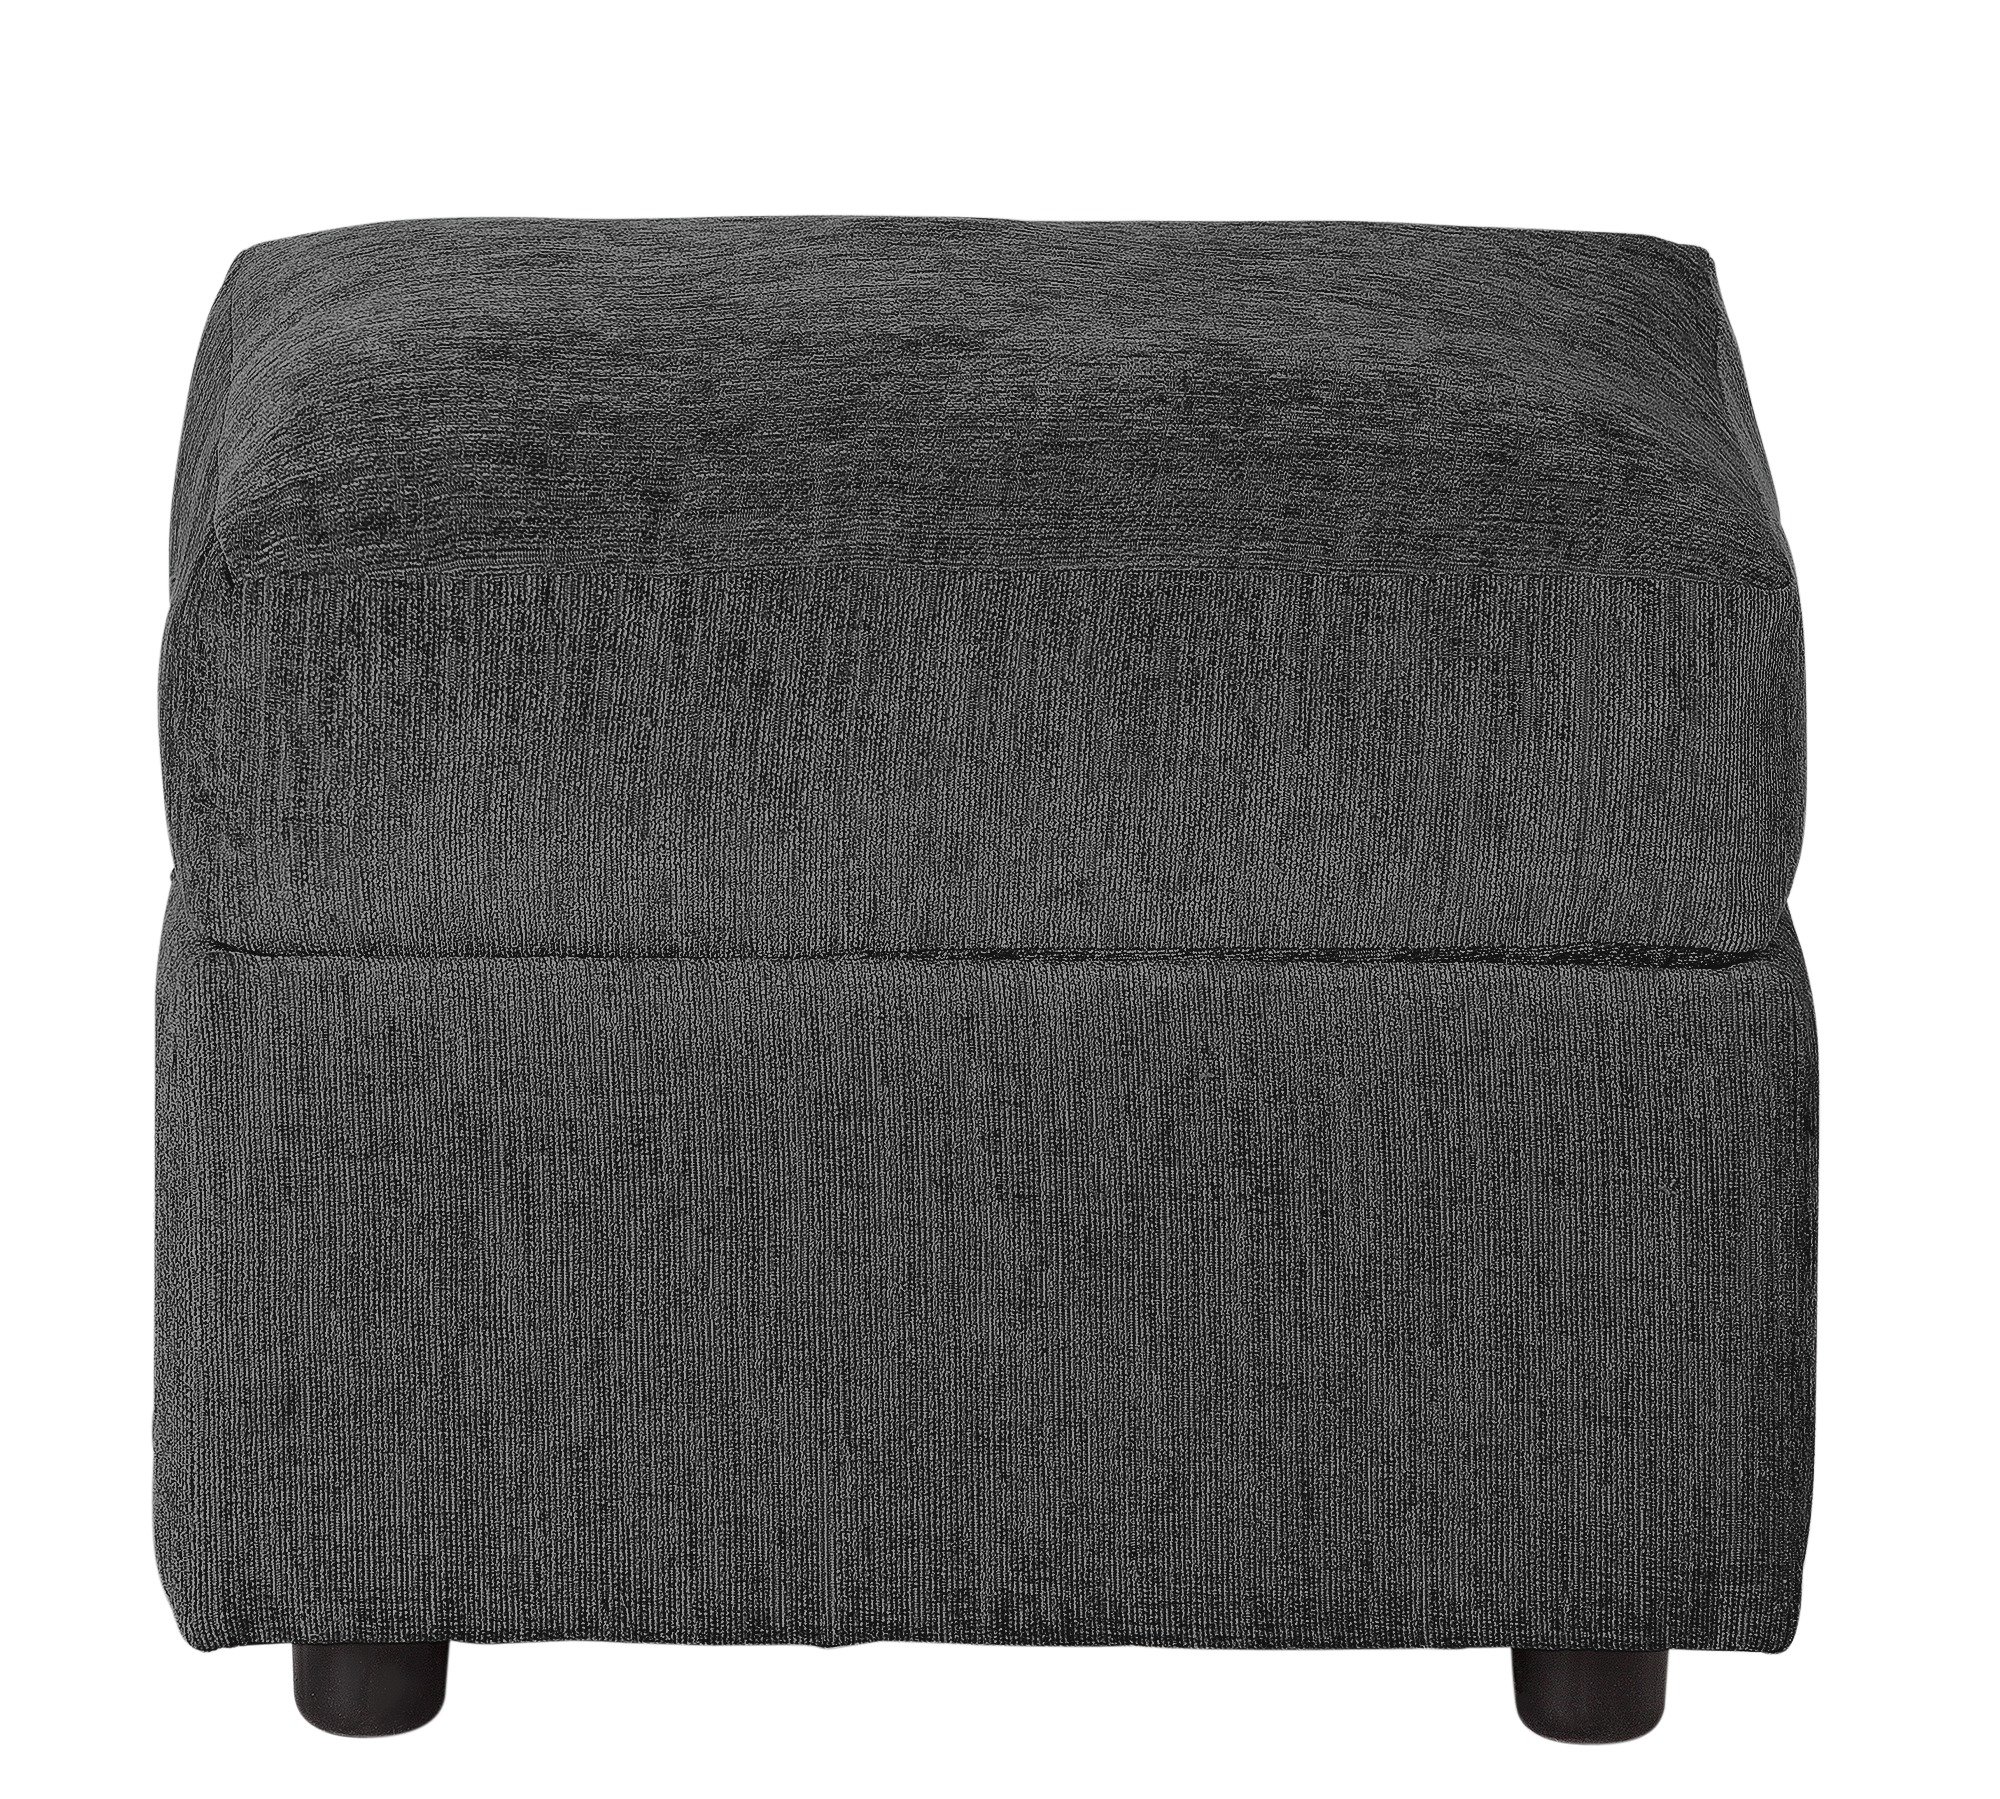 Argos Home Tessa Fabric Storage Footstool - Charcoal